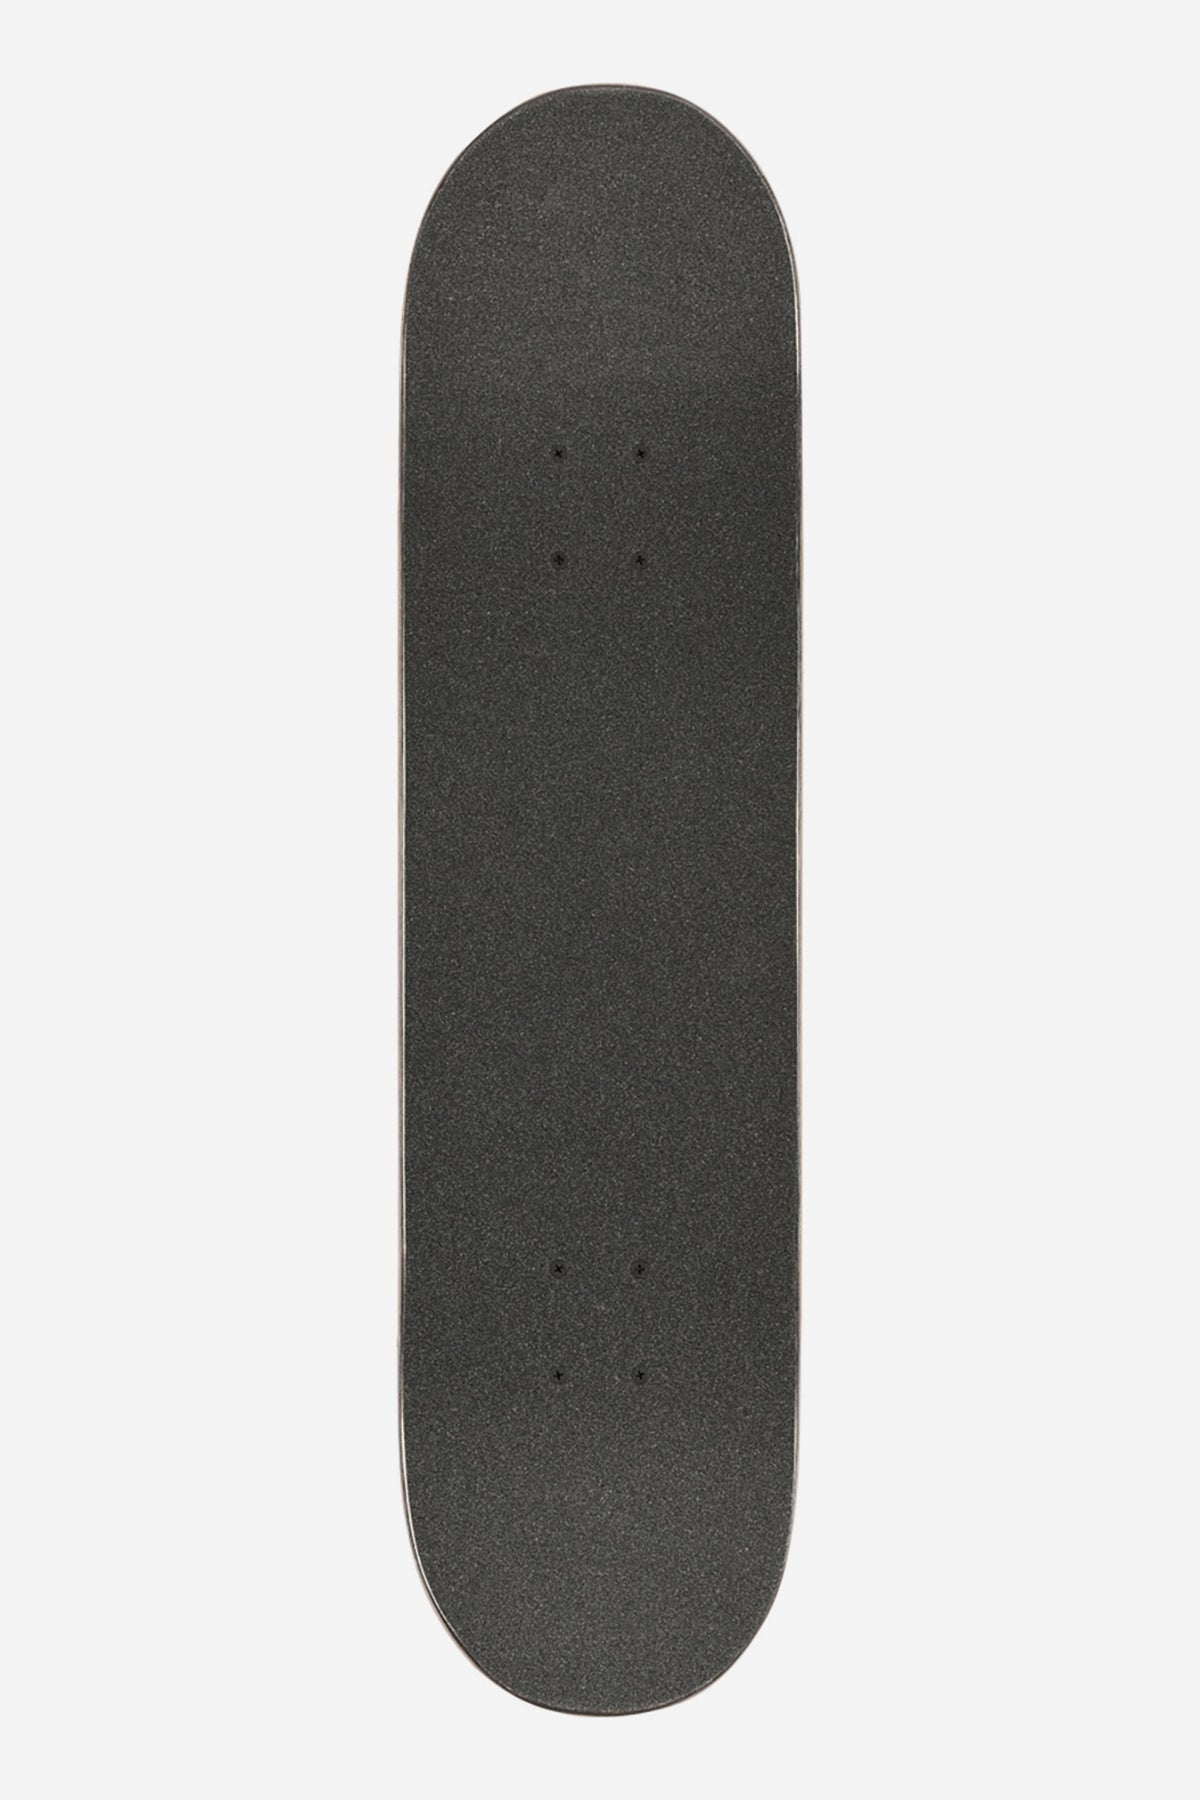 Goodstock - Fatigue Green - 8.25" Complete Skateboard